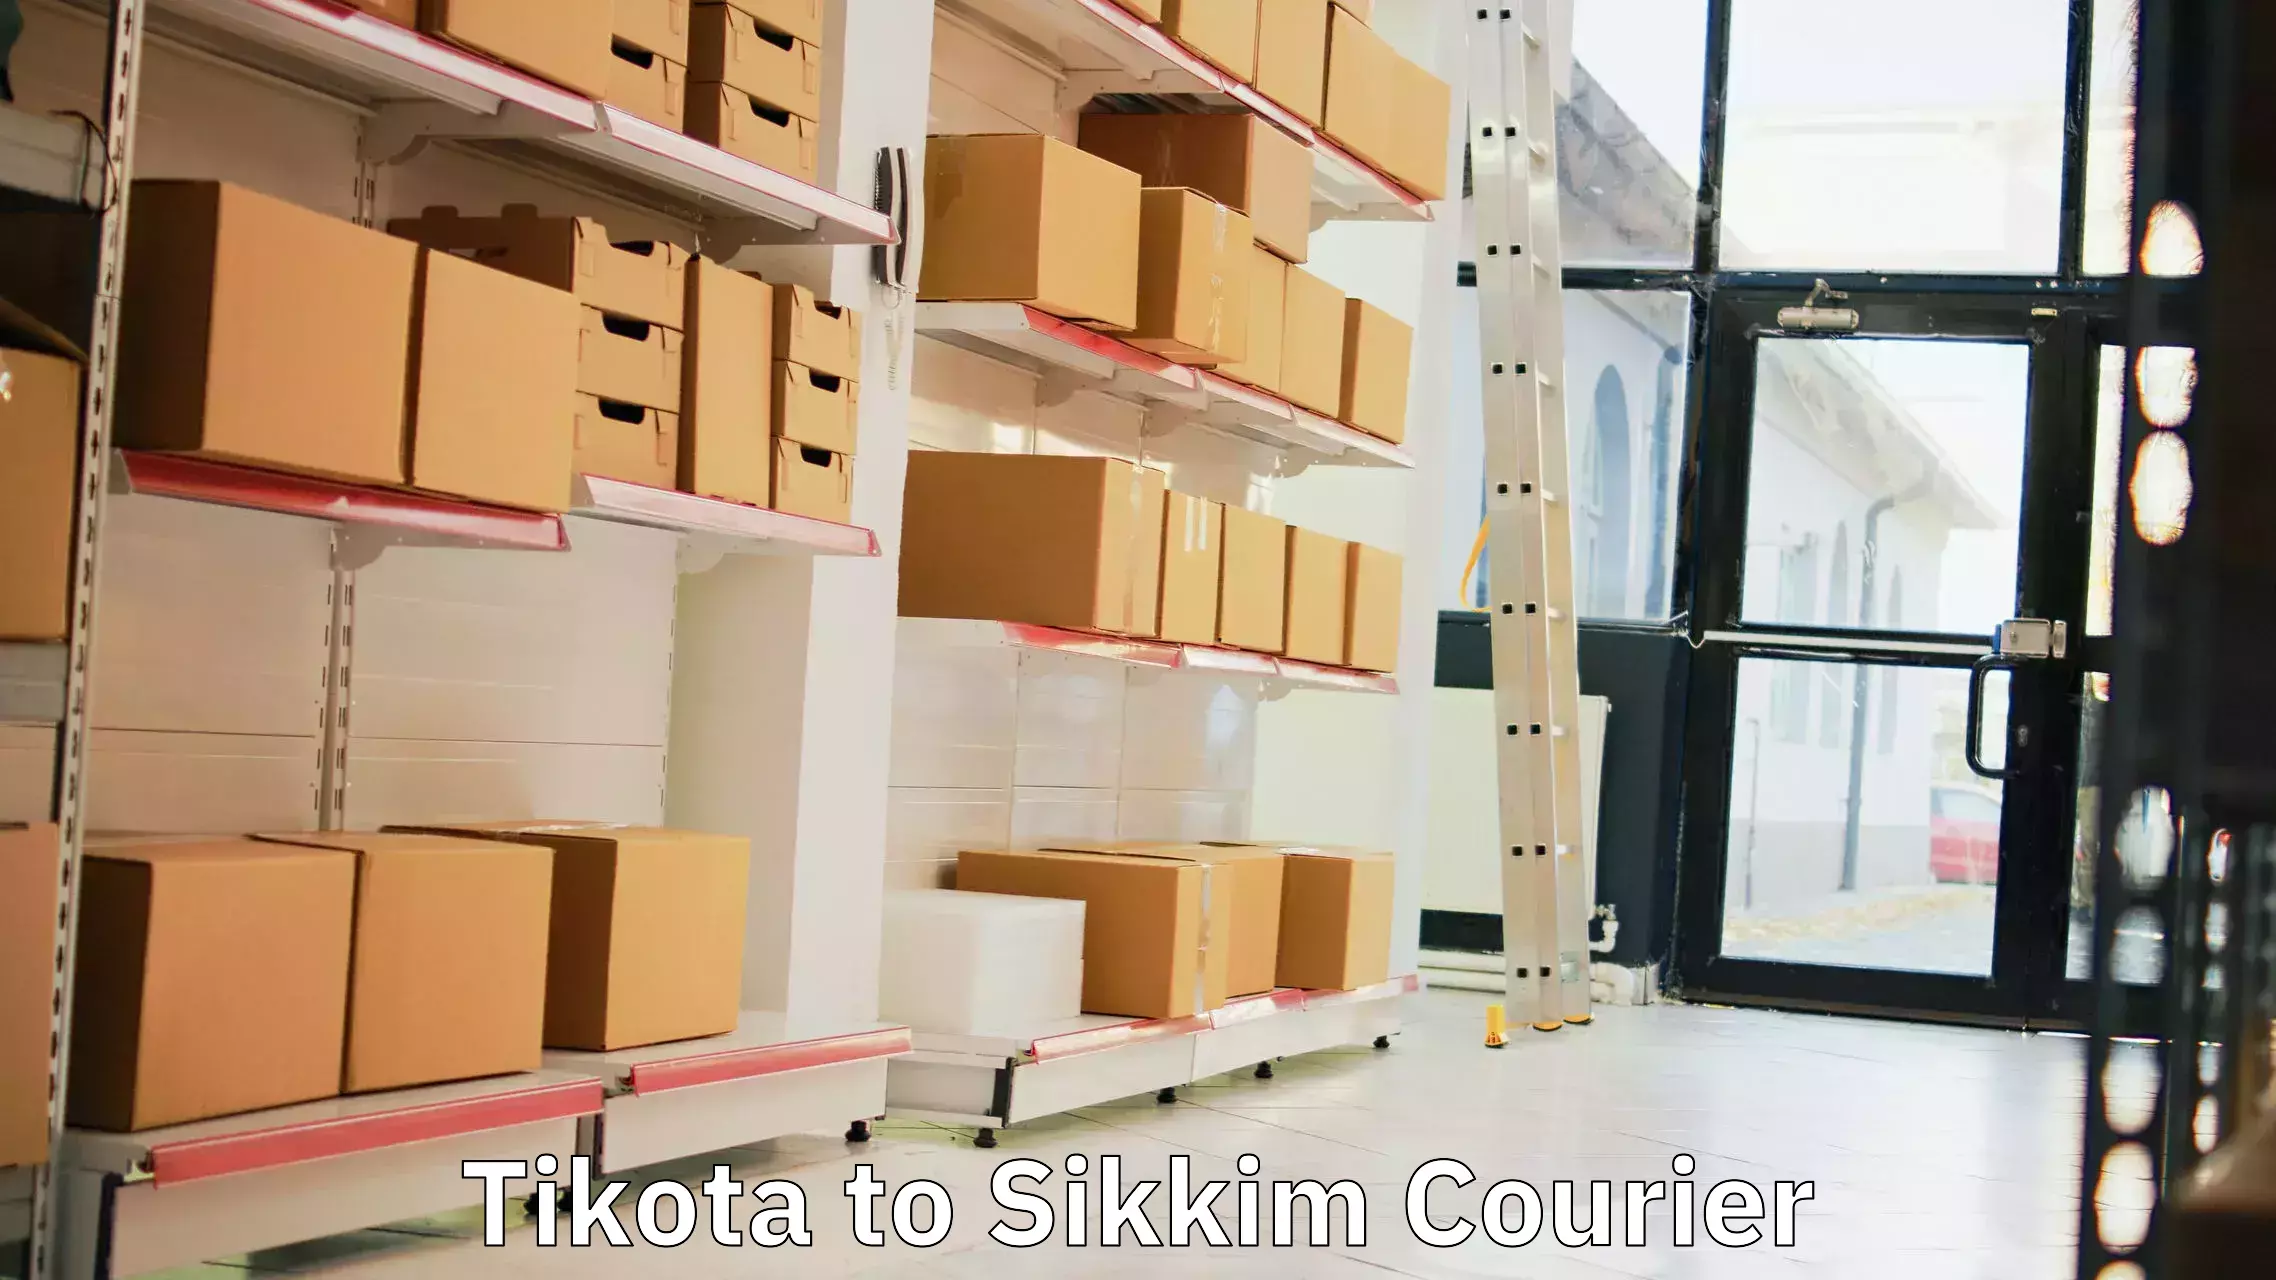 Courier app Tikota to Pelling